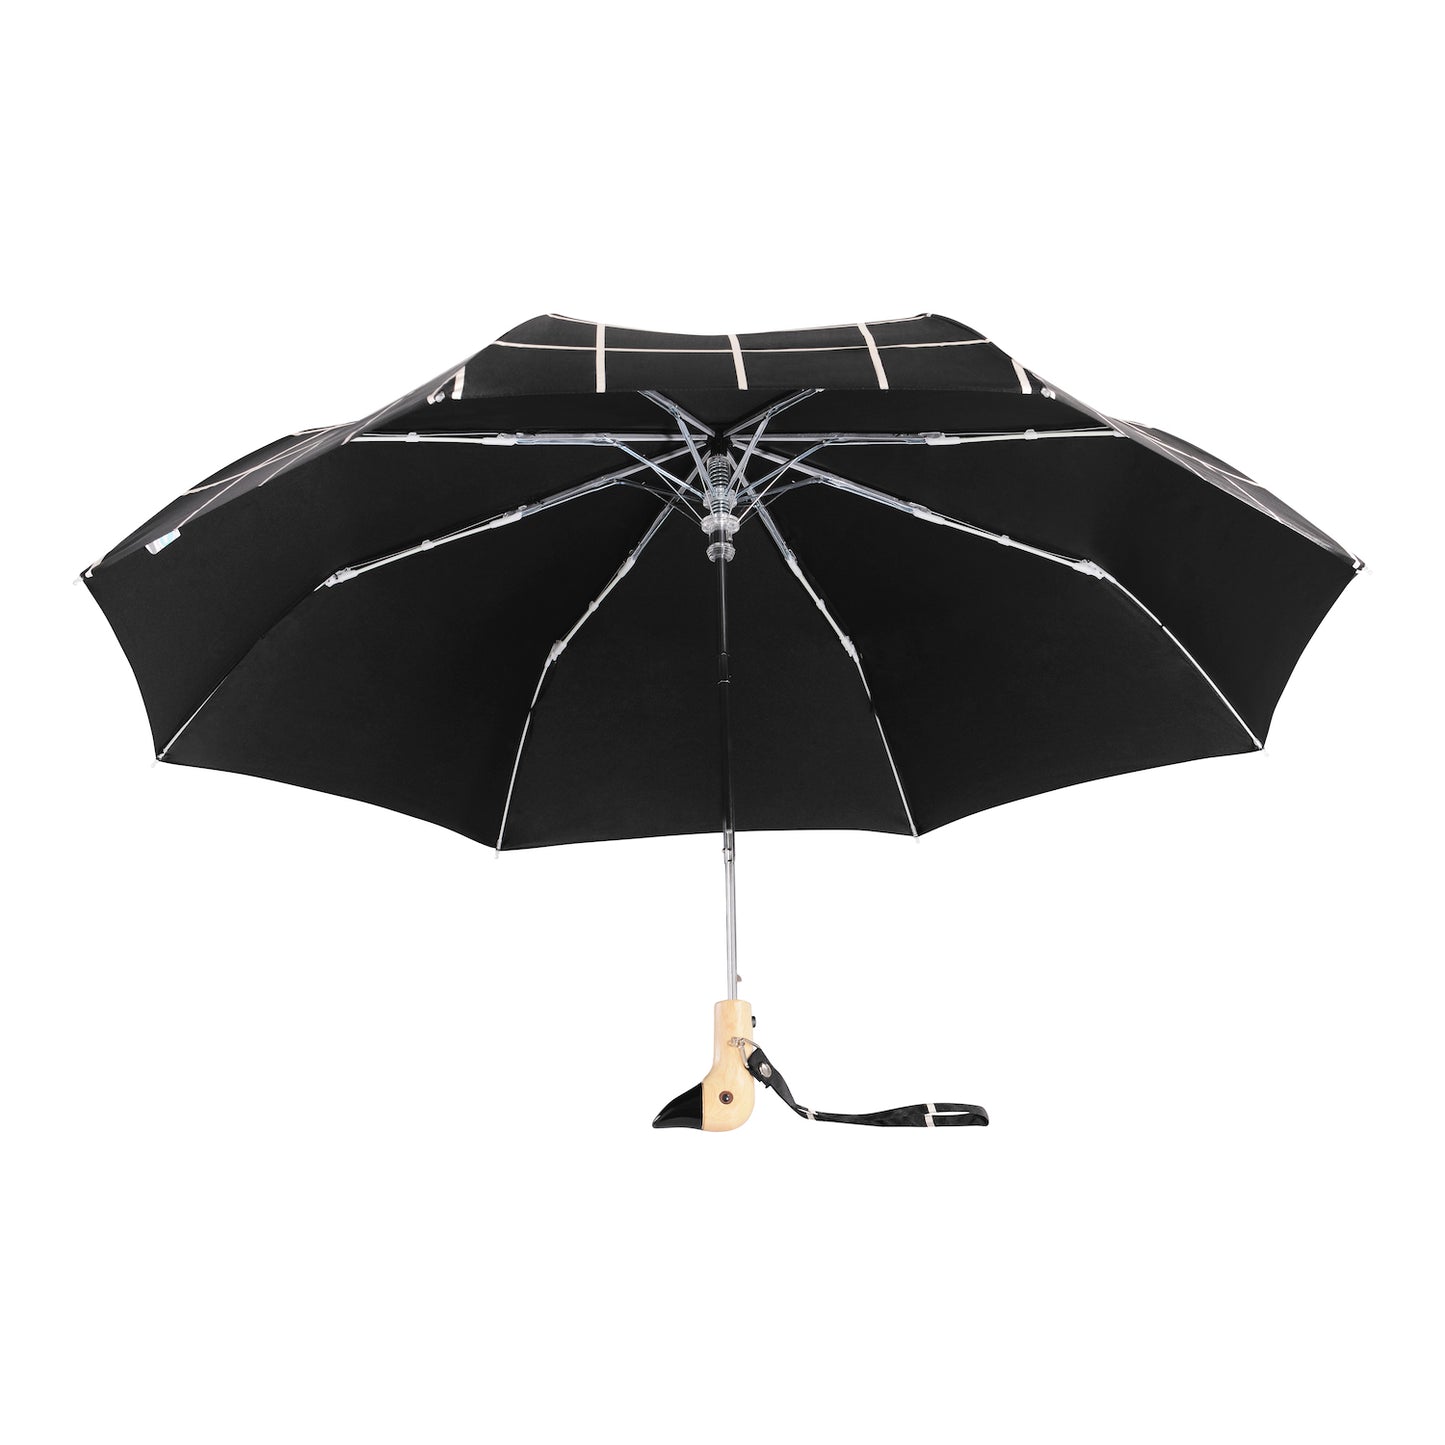 ORIGINAL DUCKHEAD EU handgefertigter Regenschirm mit Entenkopf BLACK GRID kompakt & nachhaltig